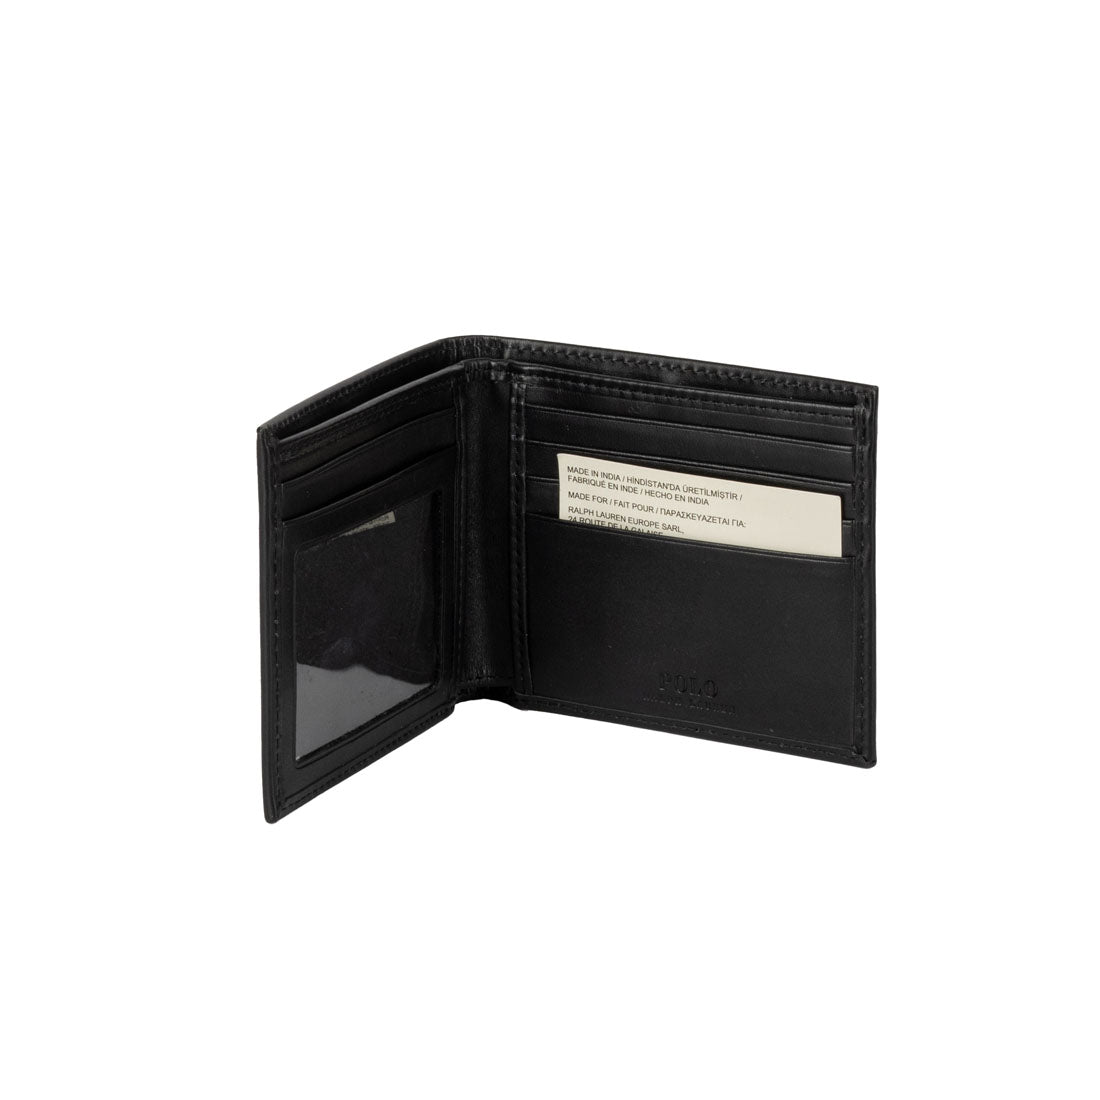 Polo Ralph Lauren Brand New Wallet & Card Holder Gift Set - mymadstore.com